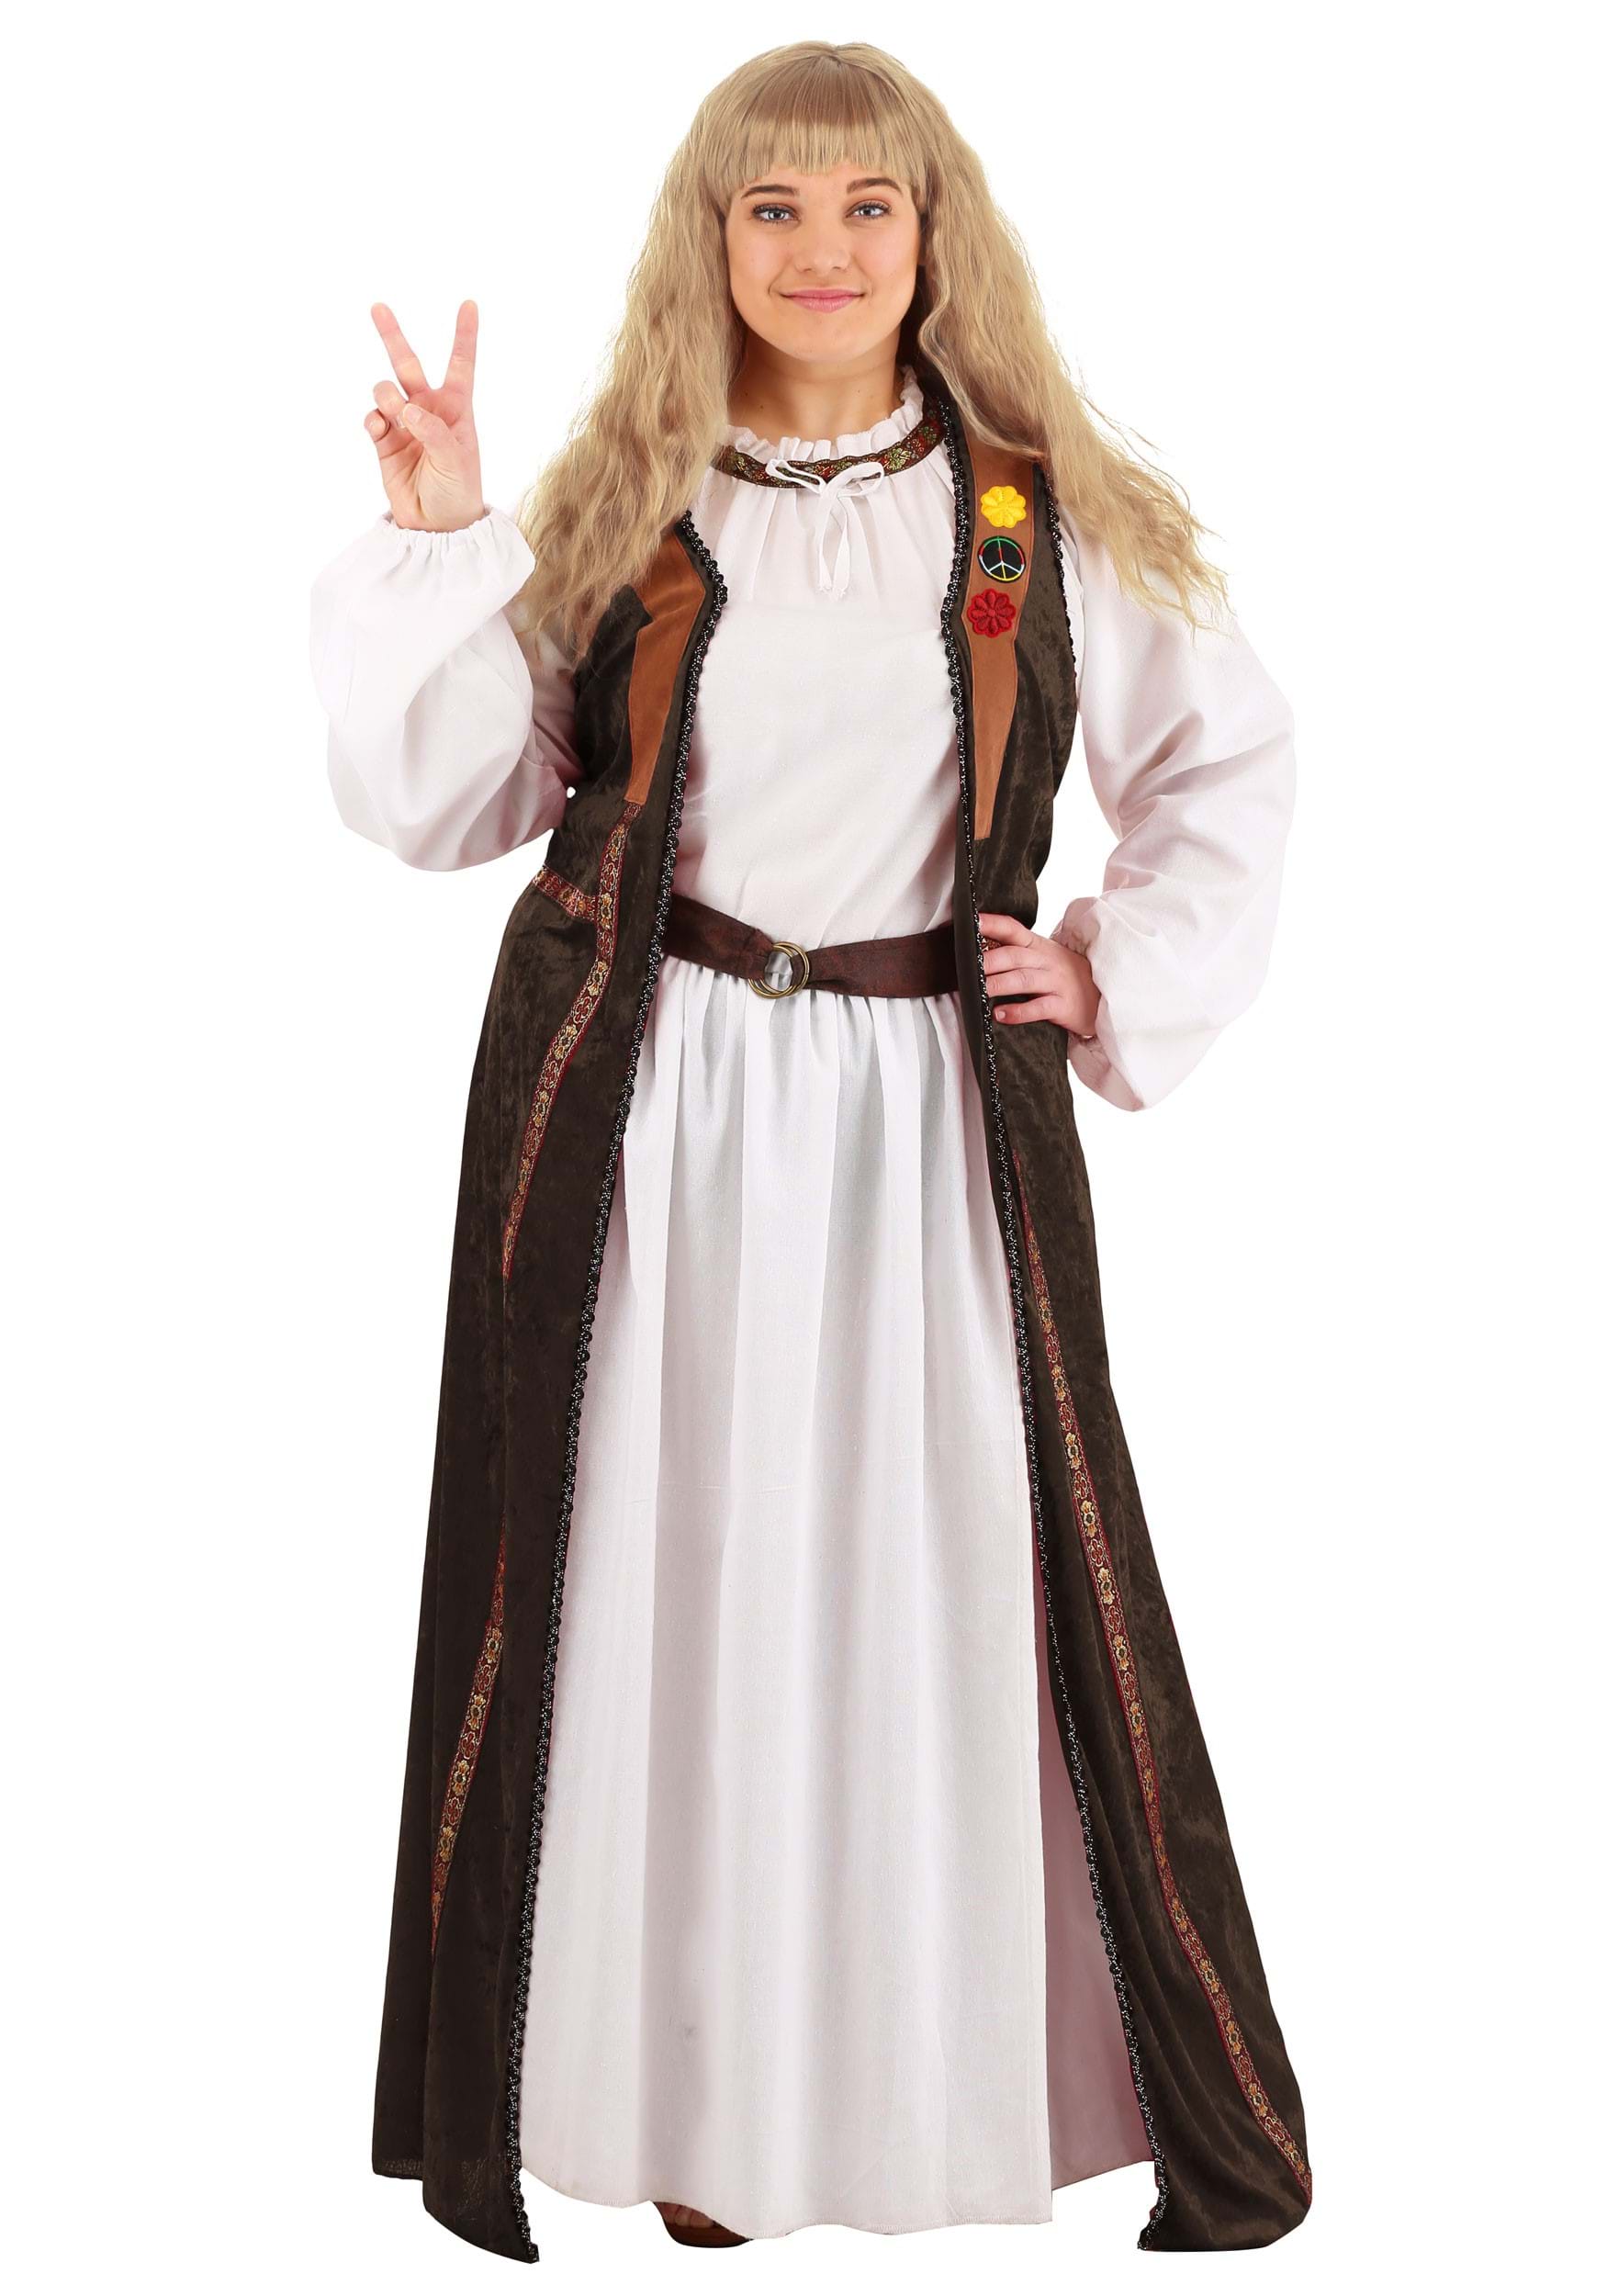 Plus Size Forrest Gump Jenny Curran Costume for Women